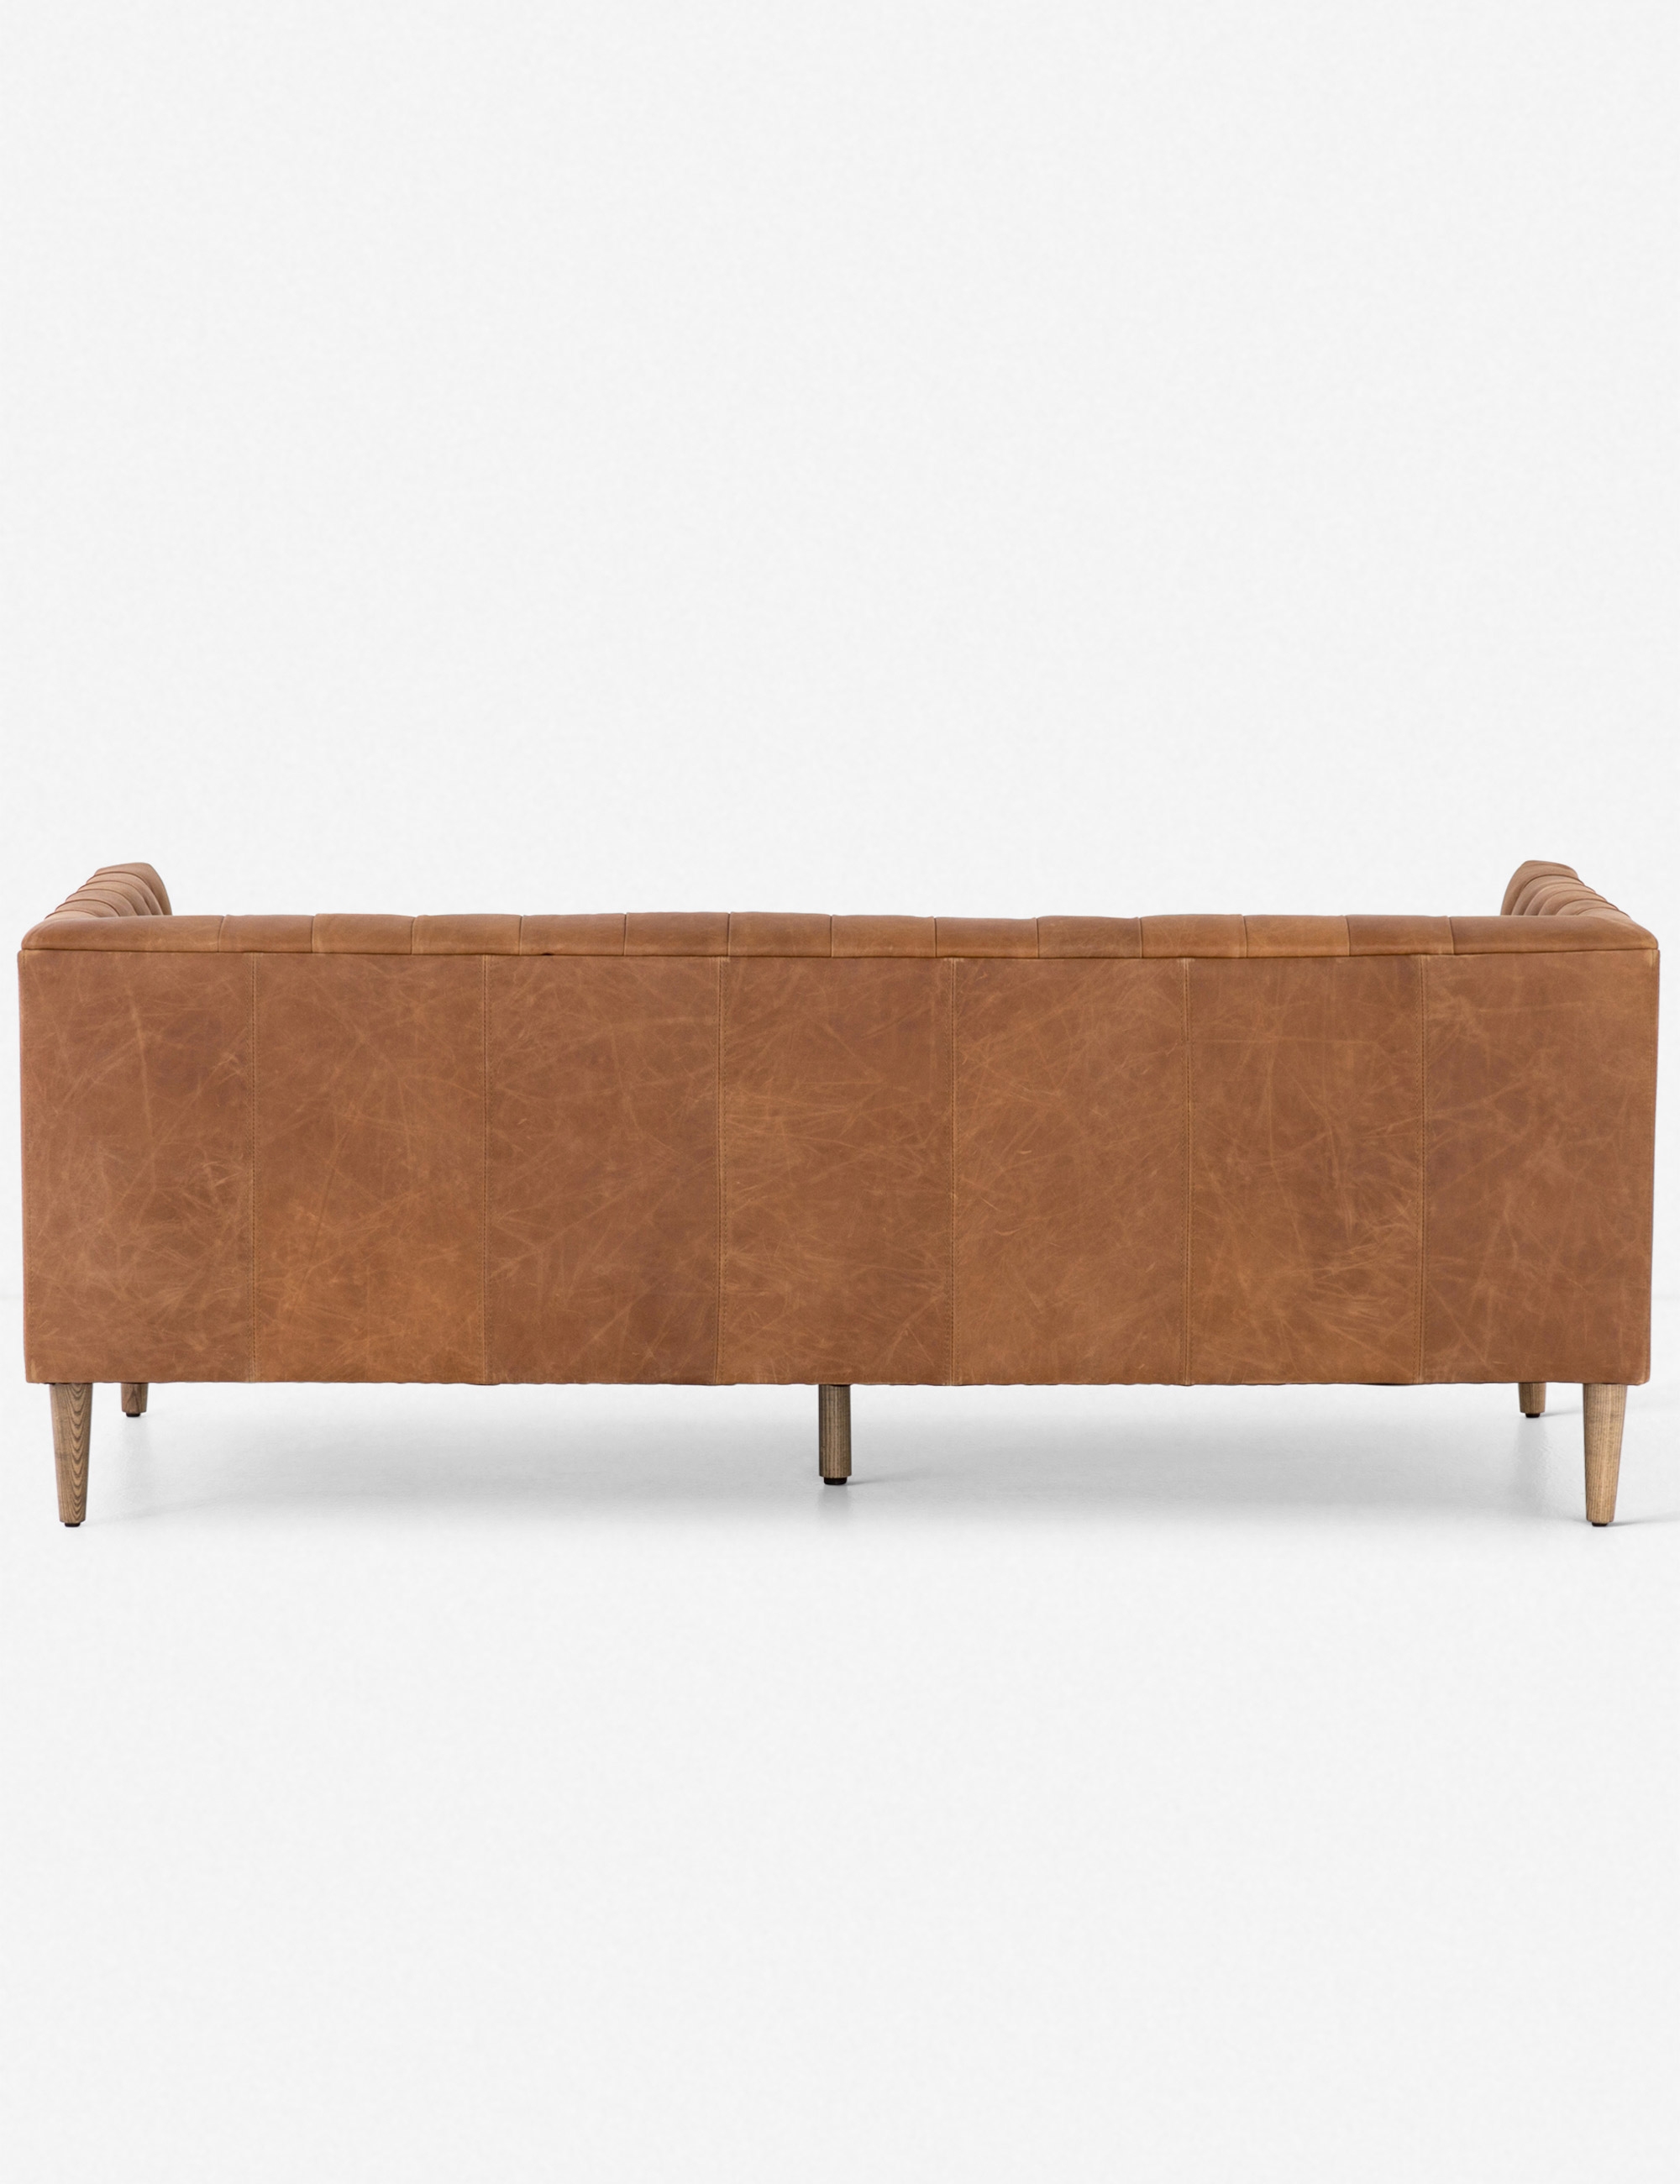 Breanne Leather Sofa - Image 9